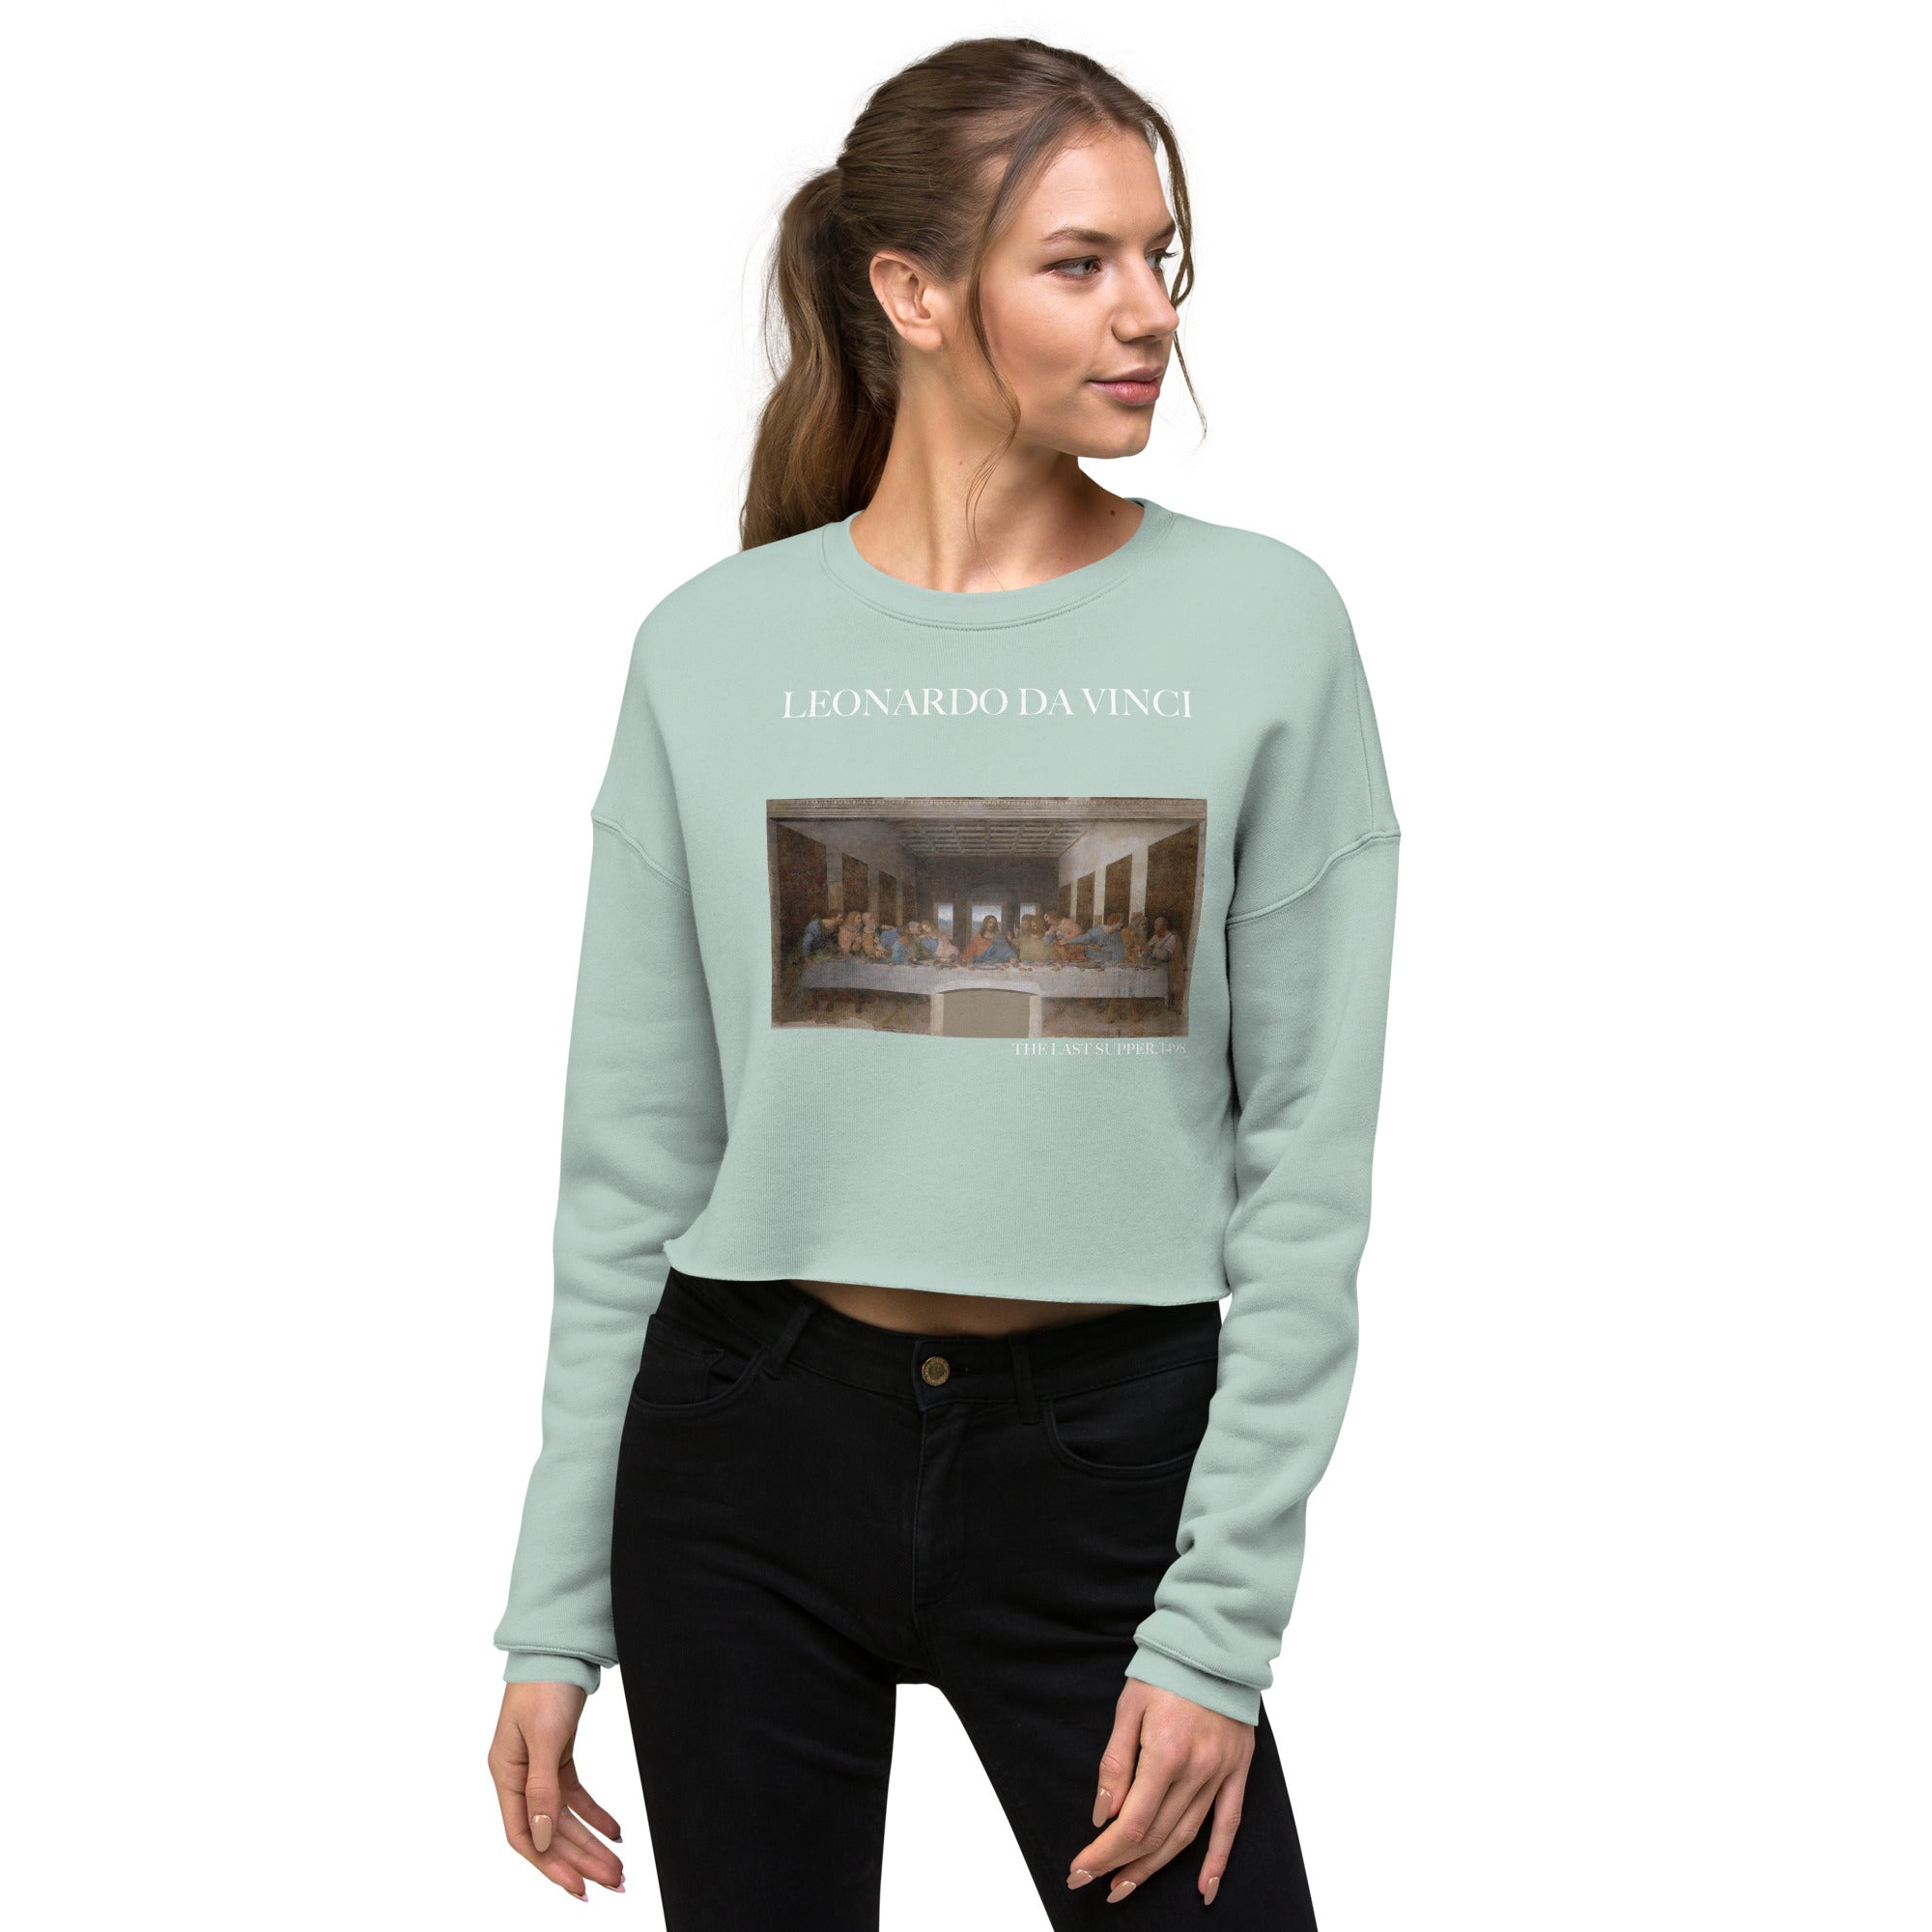 Leonardo da Vinci 'The Last Supper' Famous Painting Cropped Sweatshirt | Premium Art Cropped Sweatshirt